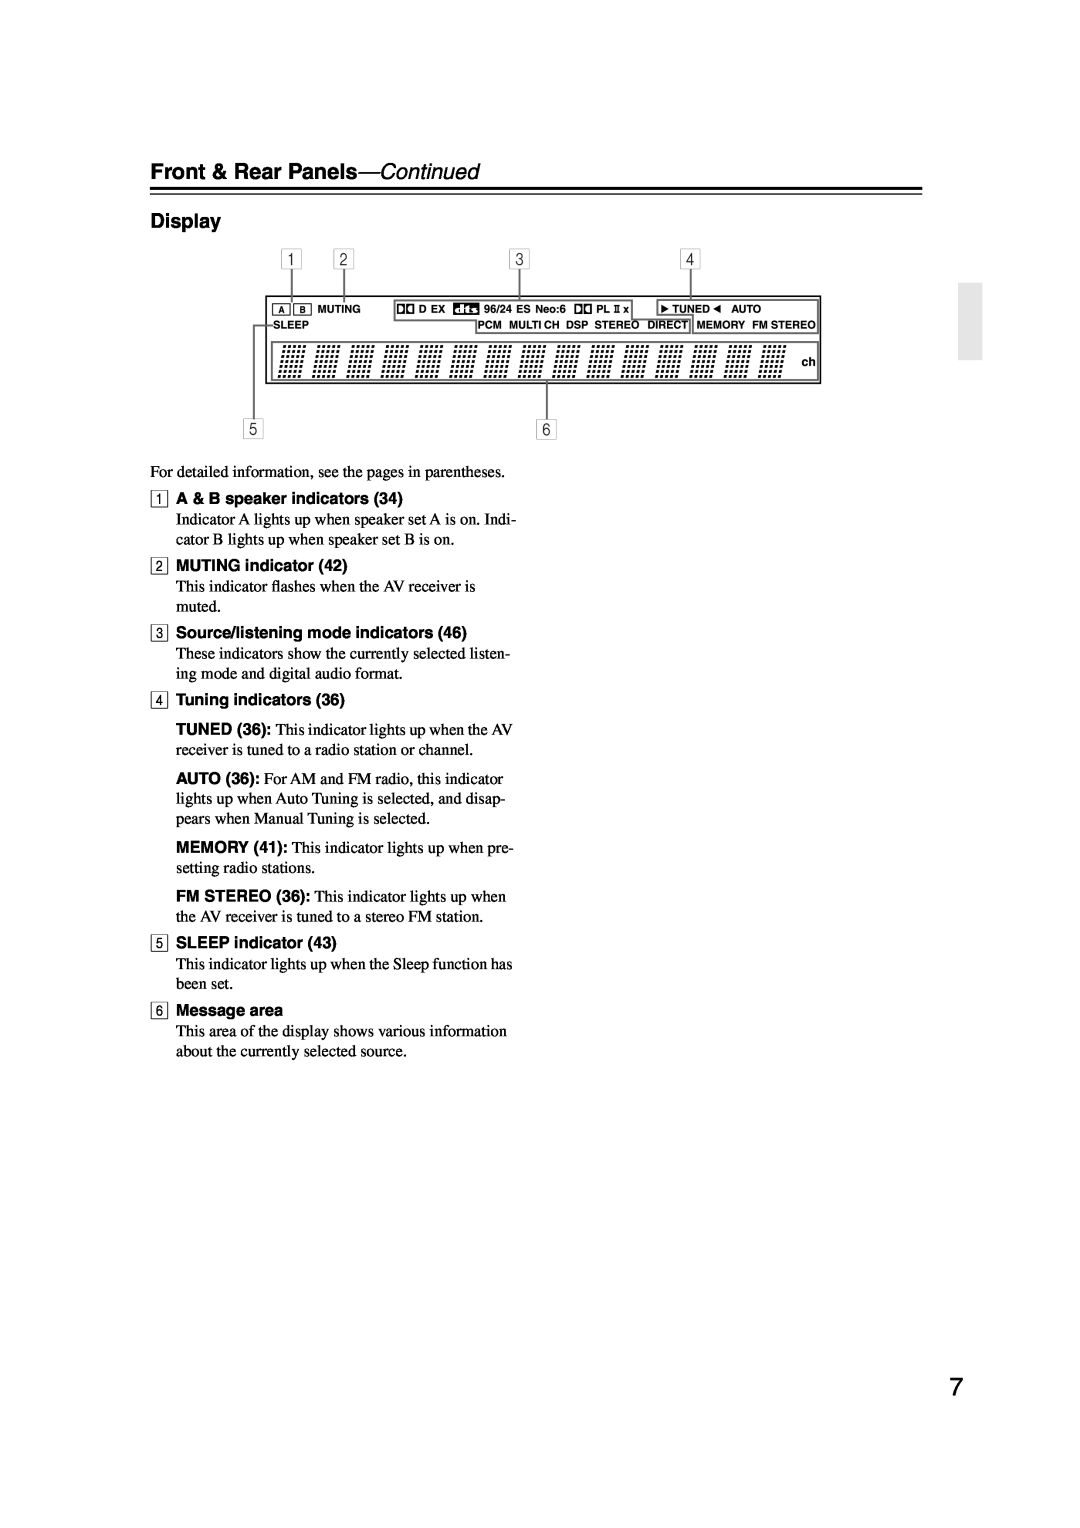 Onkyo TX-SR573 instruction manual Front & Rear Panels—Continued, Display 